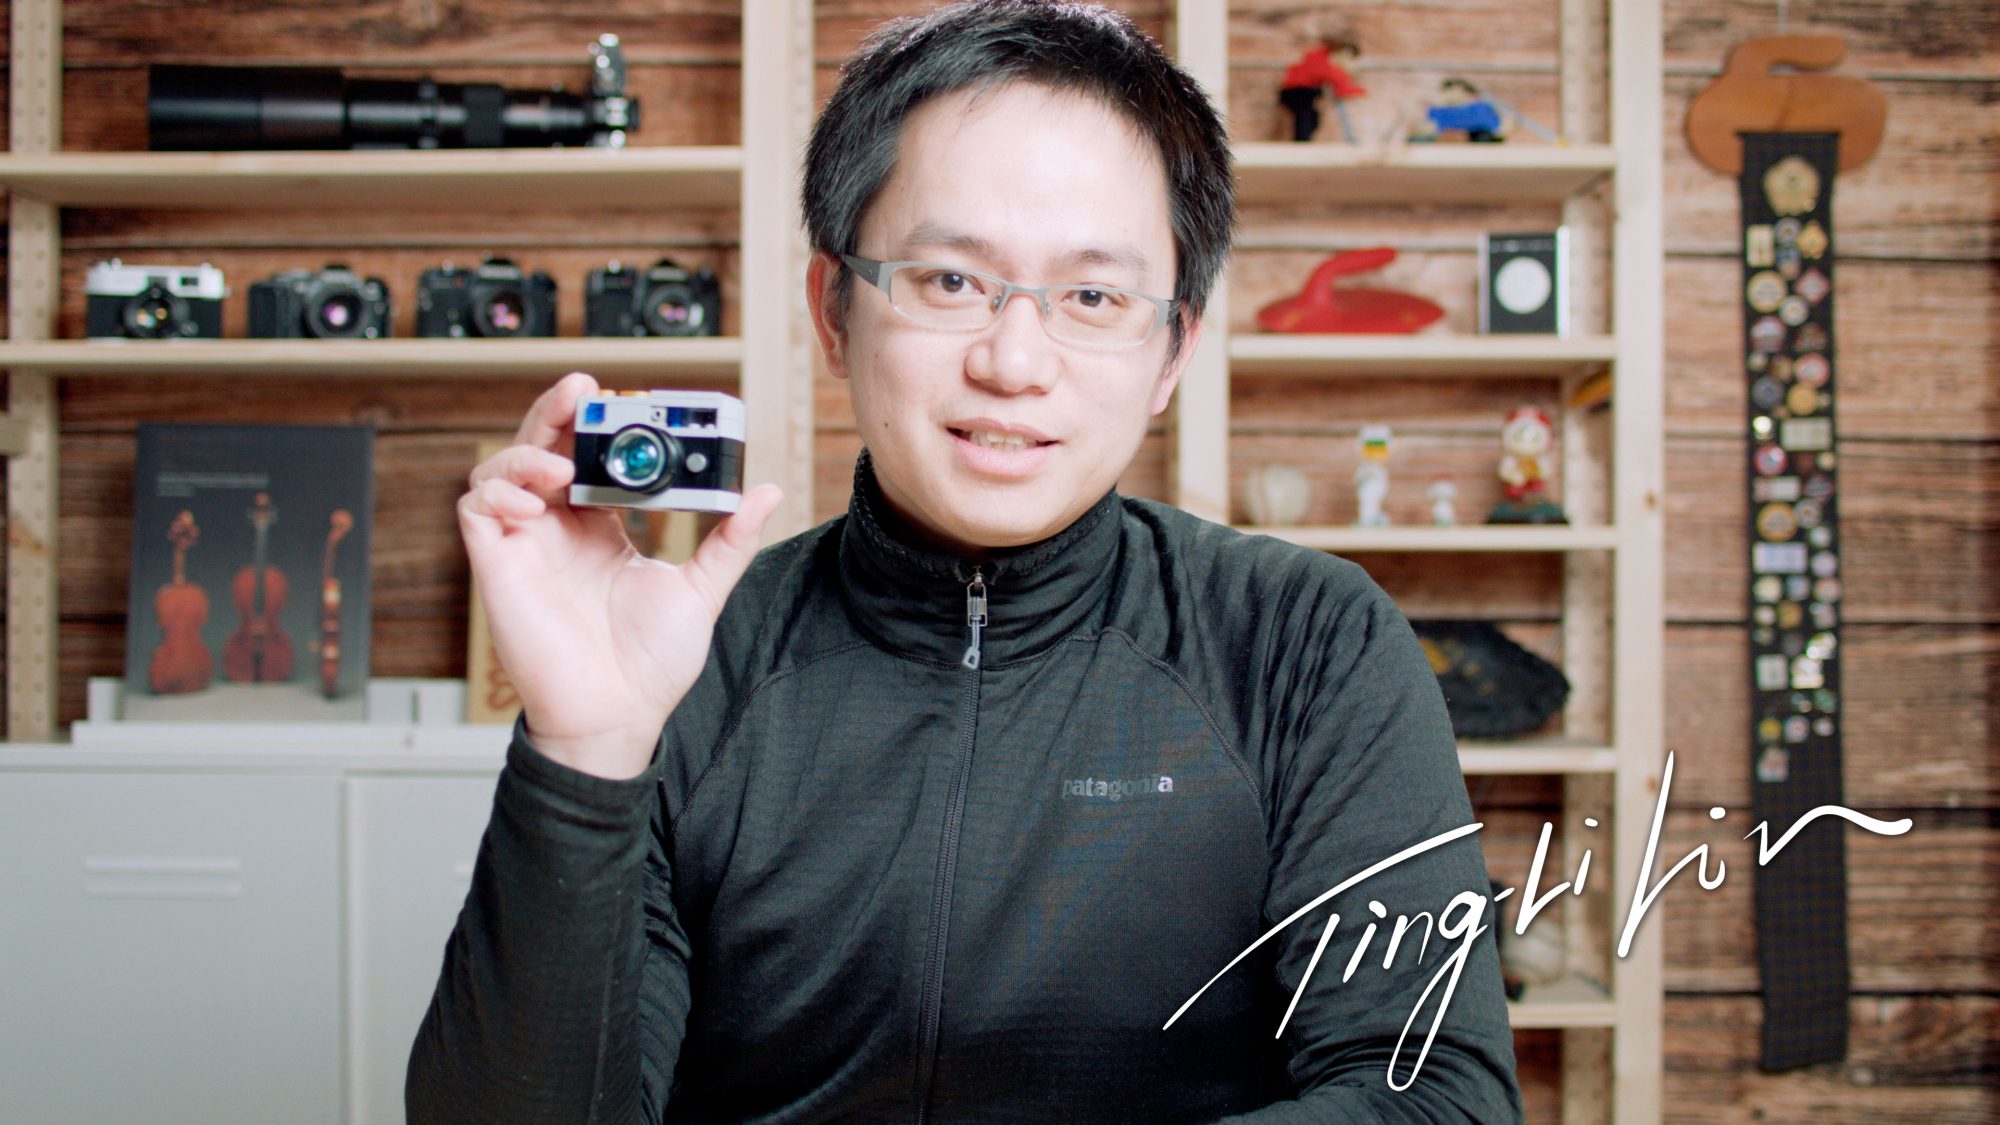 Leica M camera with LEGO bricks by Ting-Li Lin